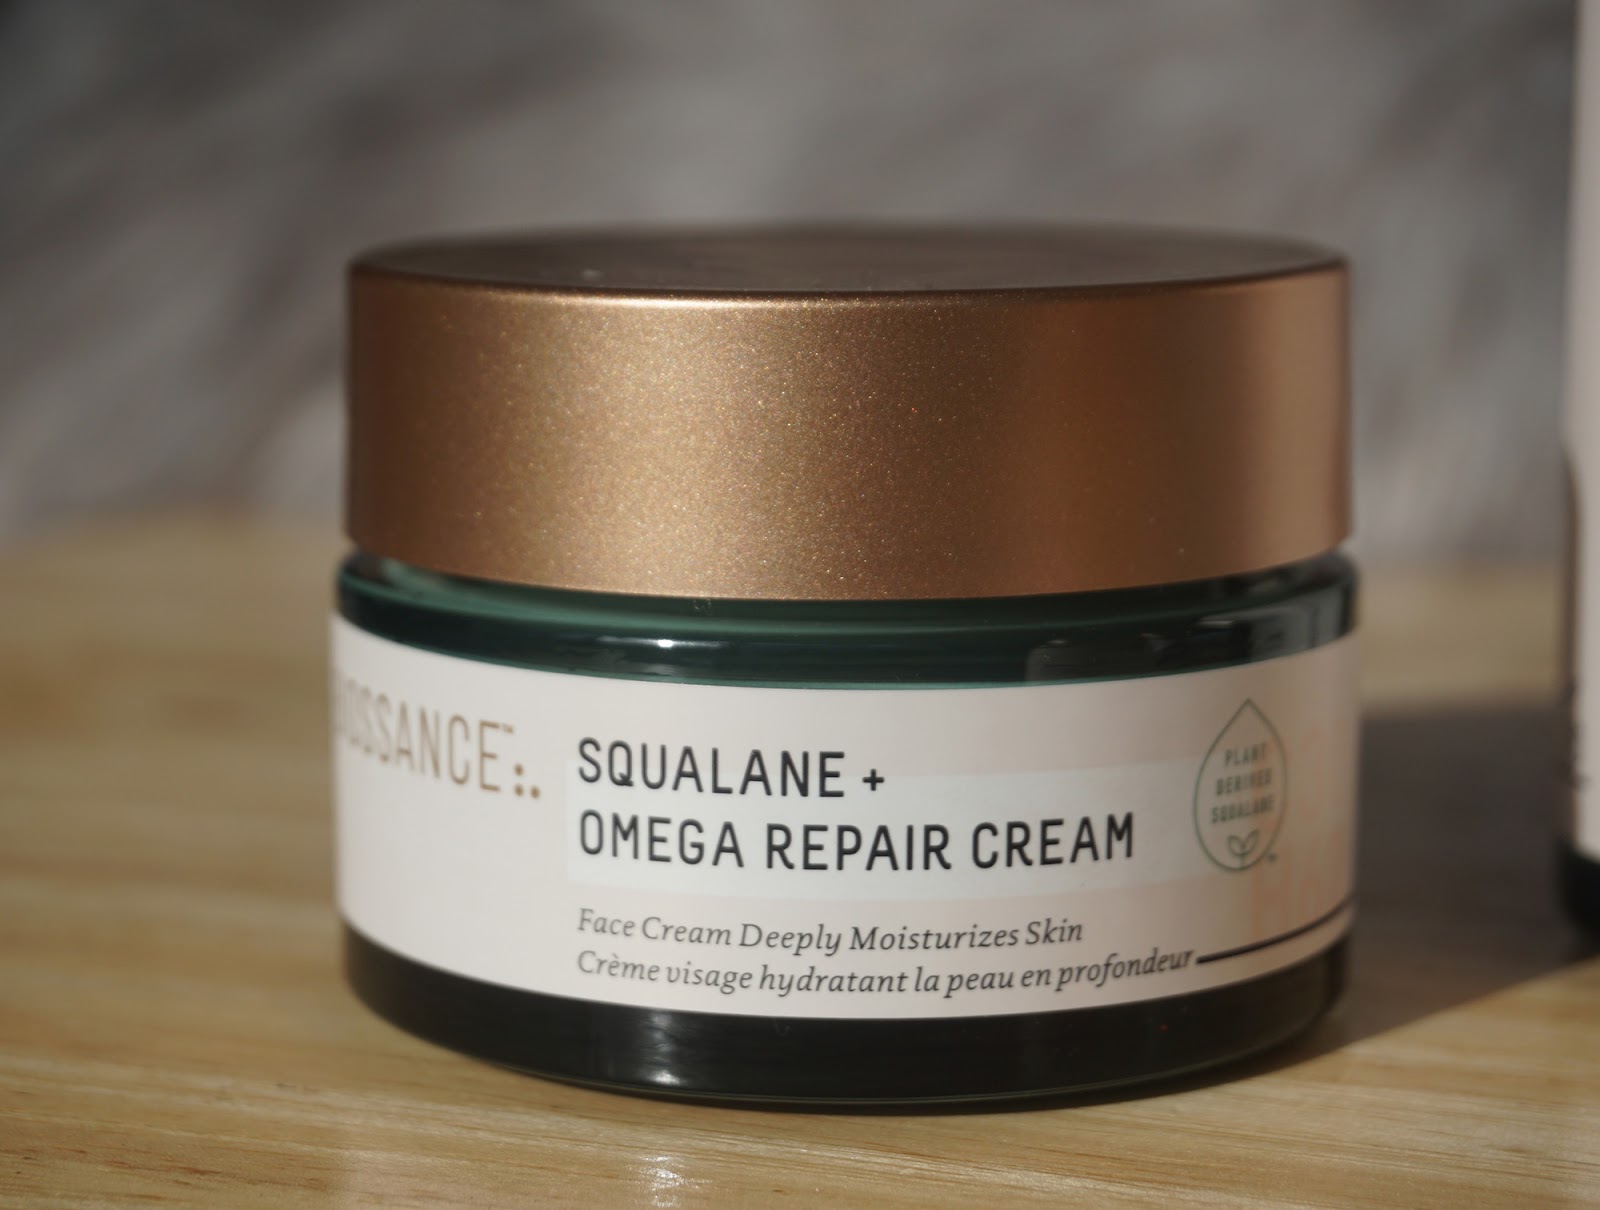 Biossance Squalane + Omega Repair Cream | bellanoirbeauty.com